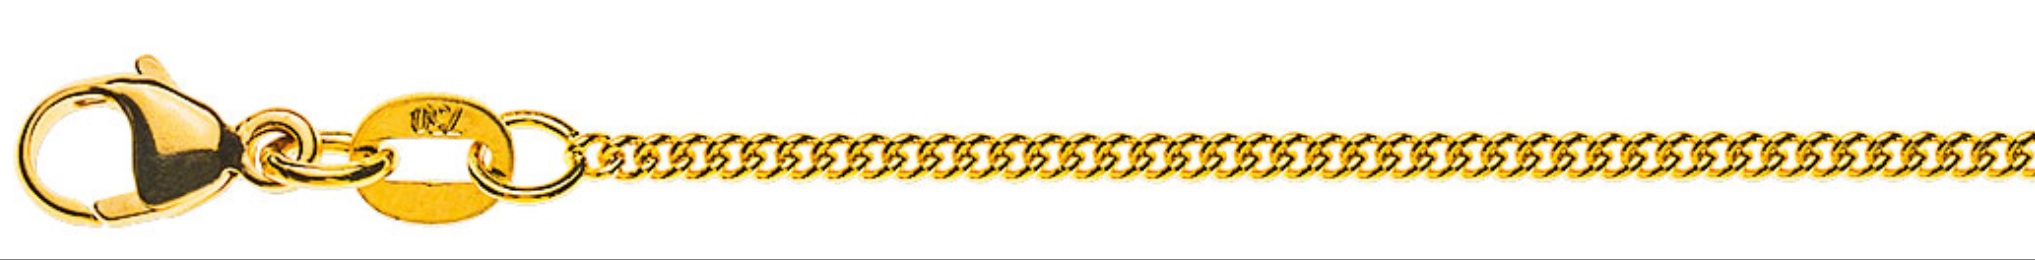 AURONOS Prestige Necklace yellow gold 18K round curb chain 38cm 1.6mm